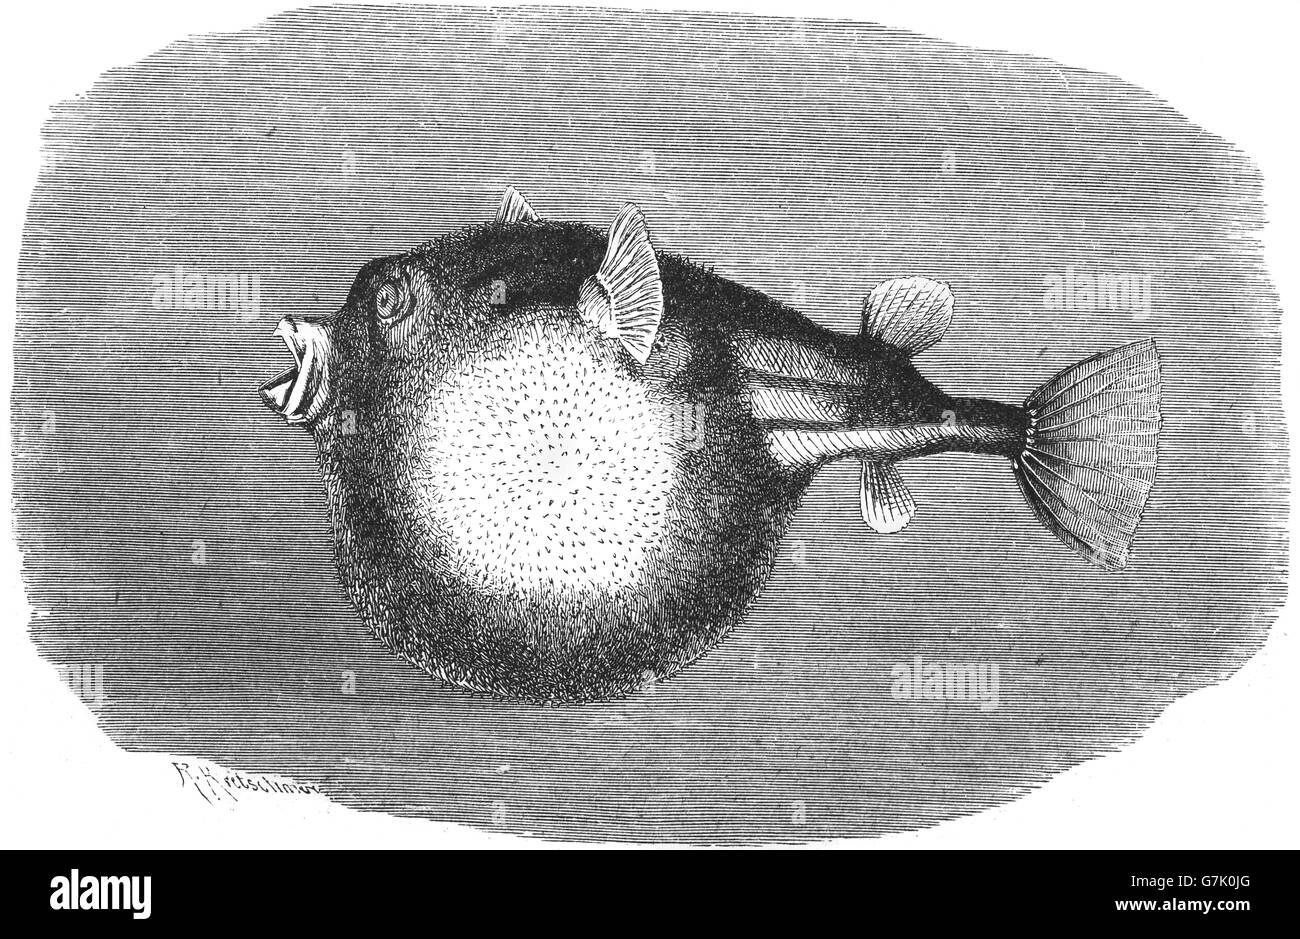 Fahaka pufferfish, Nile puffer, Globe fish, Lineatus puffer, Tetraodon lineatus, illustration from book dated 1904 Stock Photo